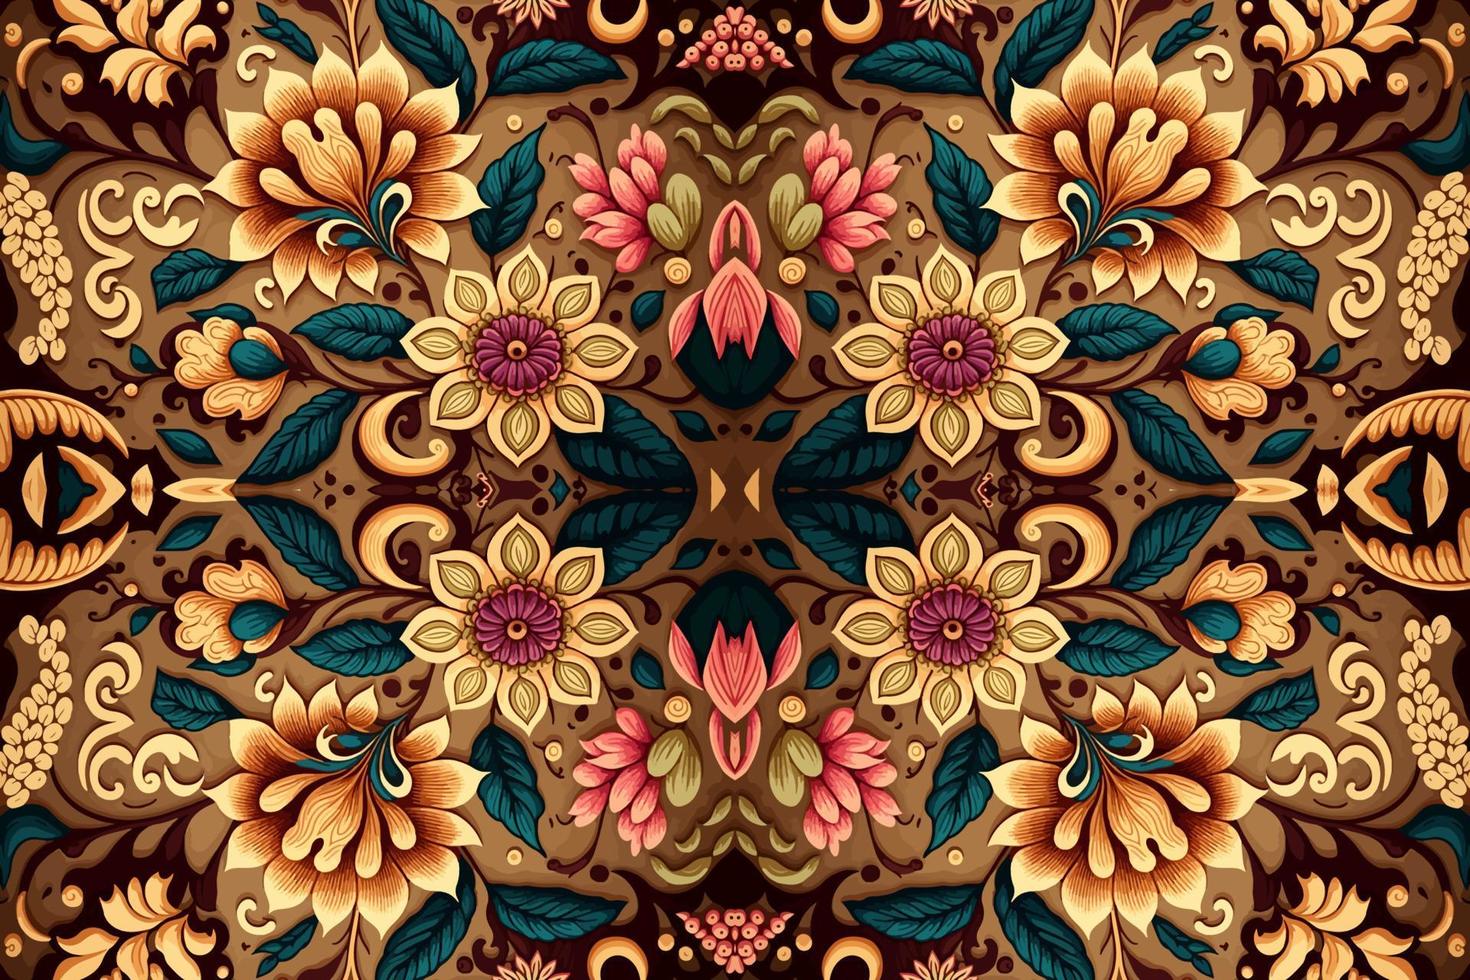 etnisk blommig sömlös mönster gyllene bakgrund. abstrakt traditionell folk antik stam- grafisk linje. textur textil- tyg indisk mönster. utsmyckad elegant lyx årgång retro stil. vektor